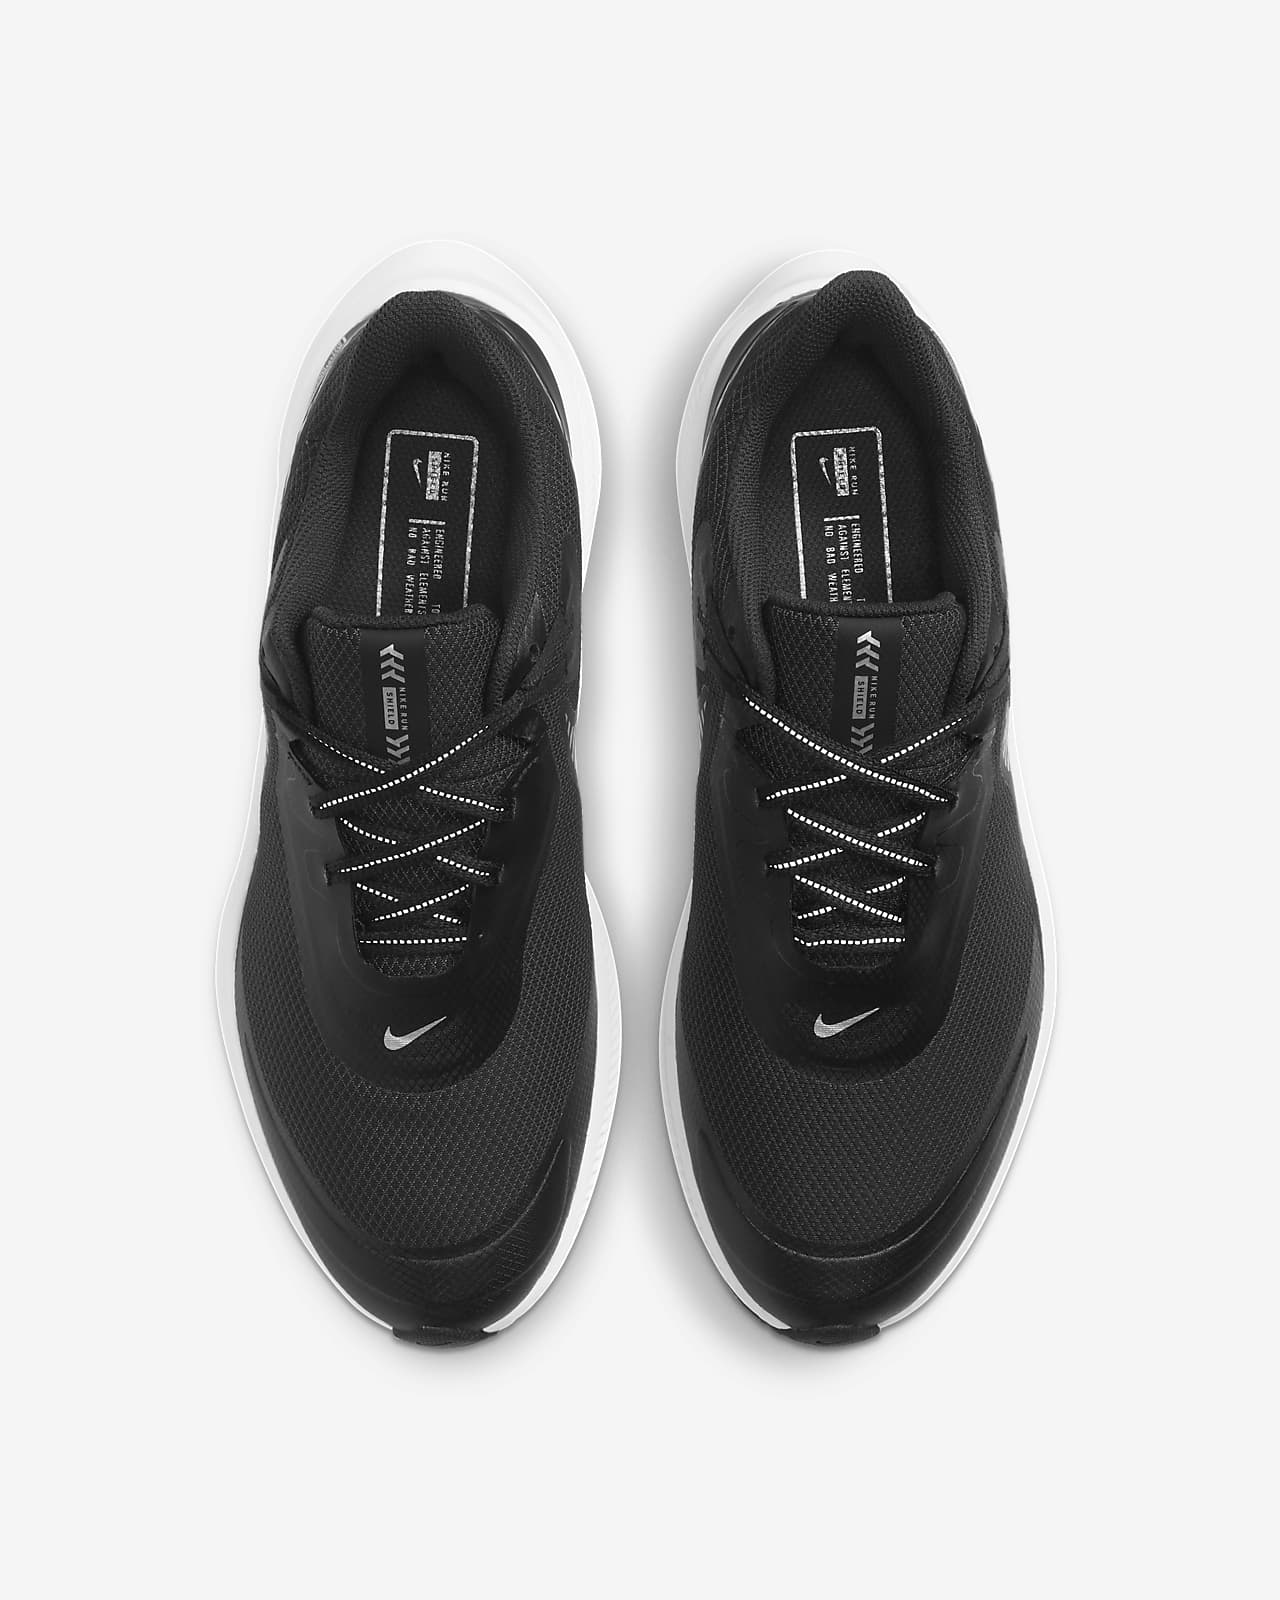 nike quest women's running shoes black